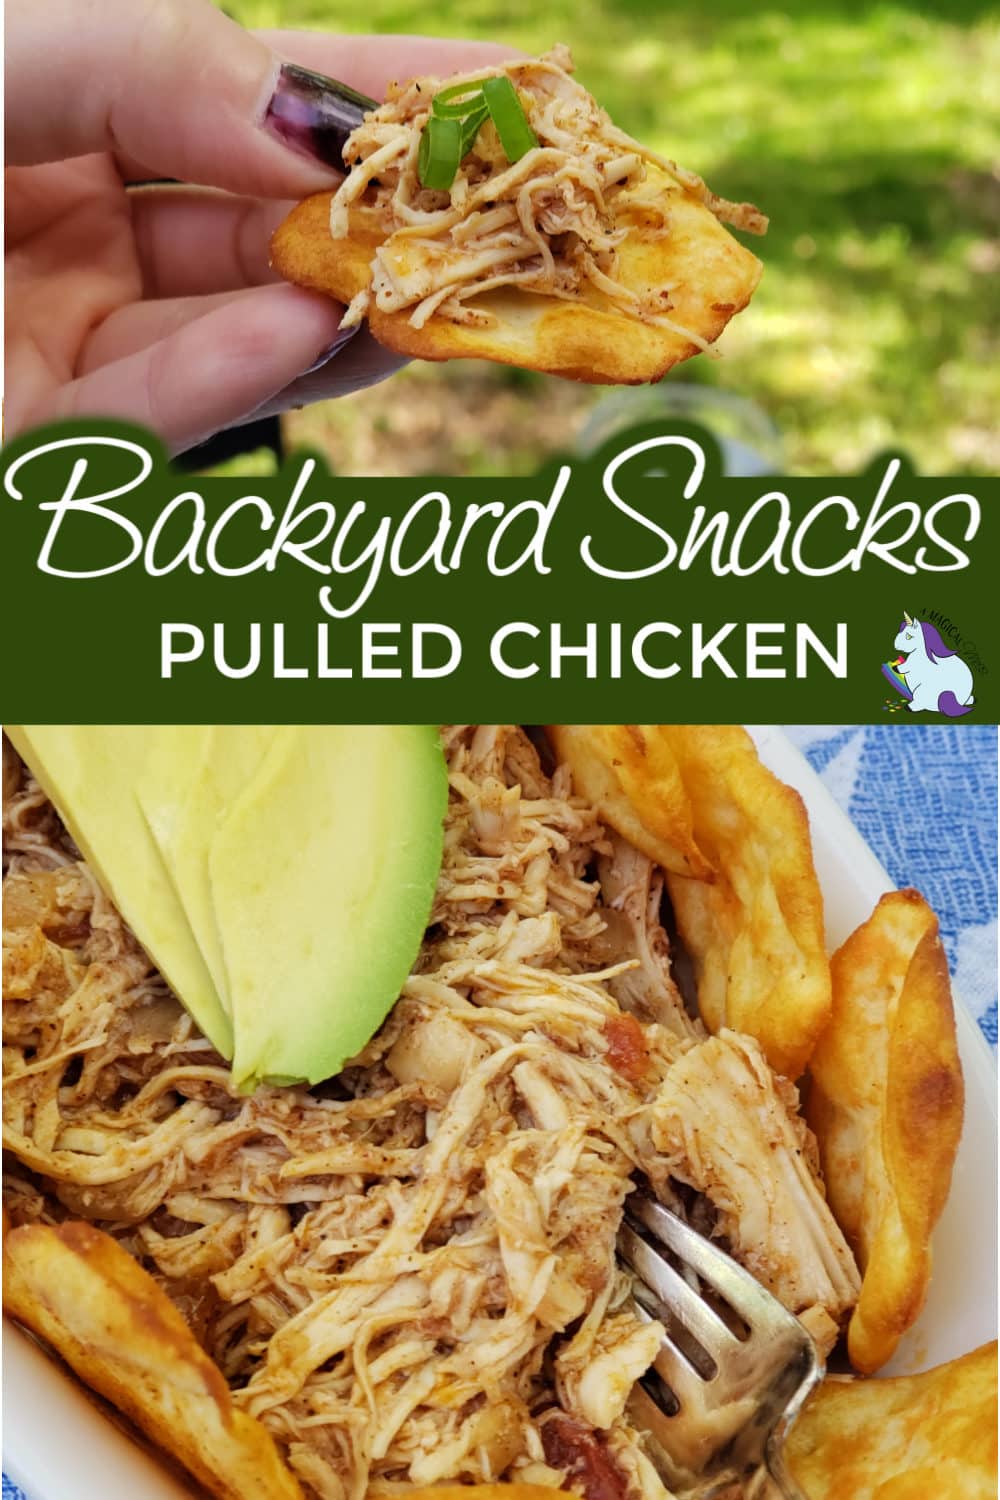 Backyard snacks - pulled chicken